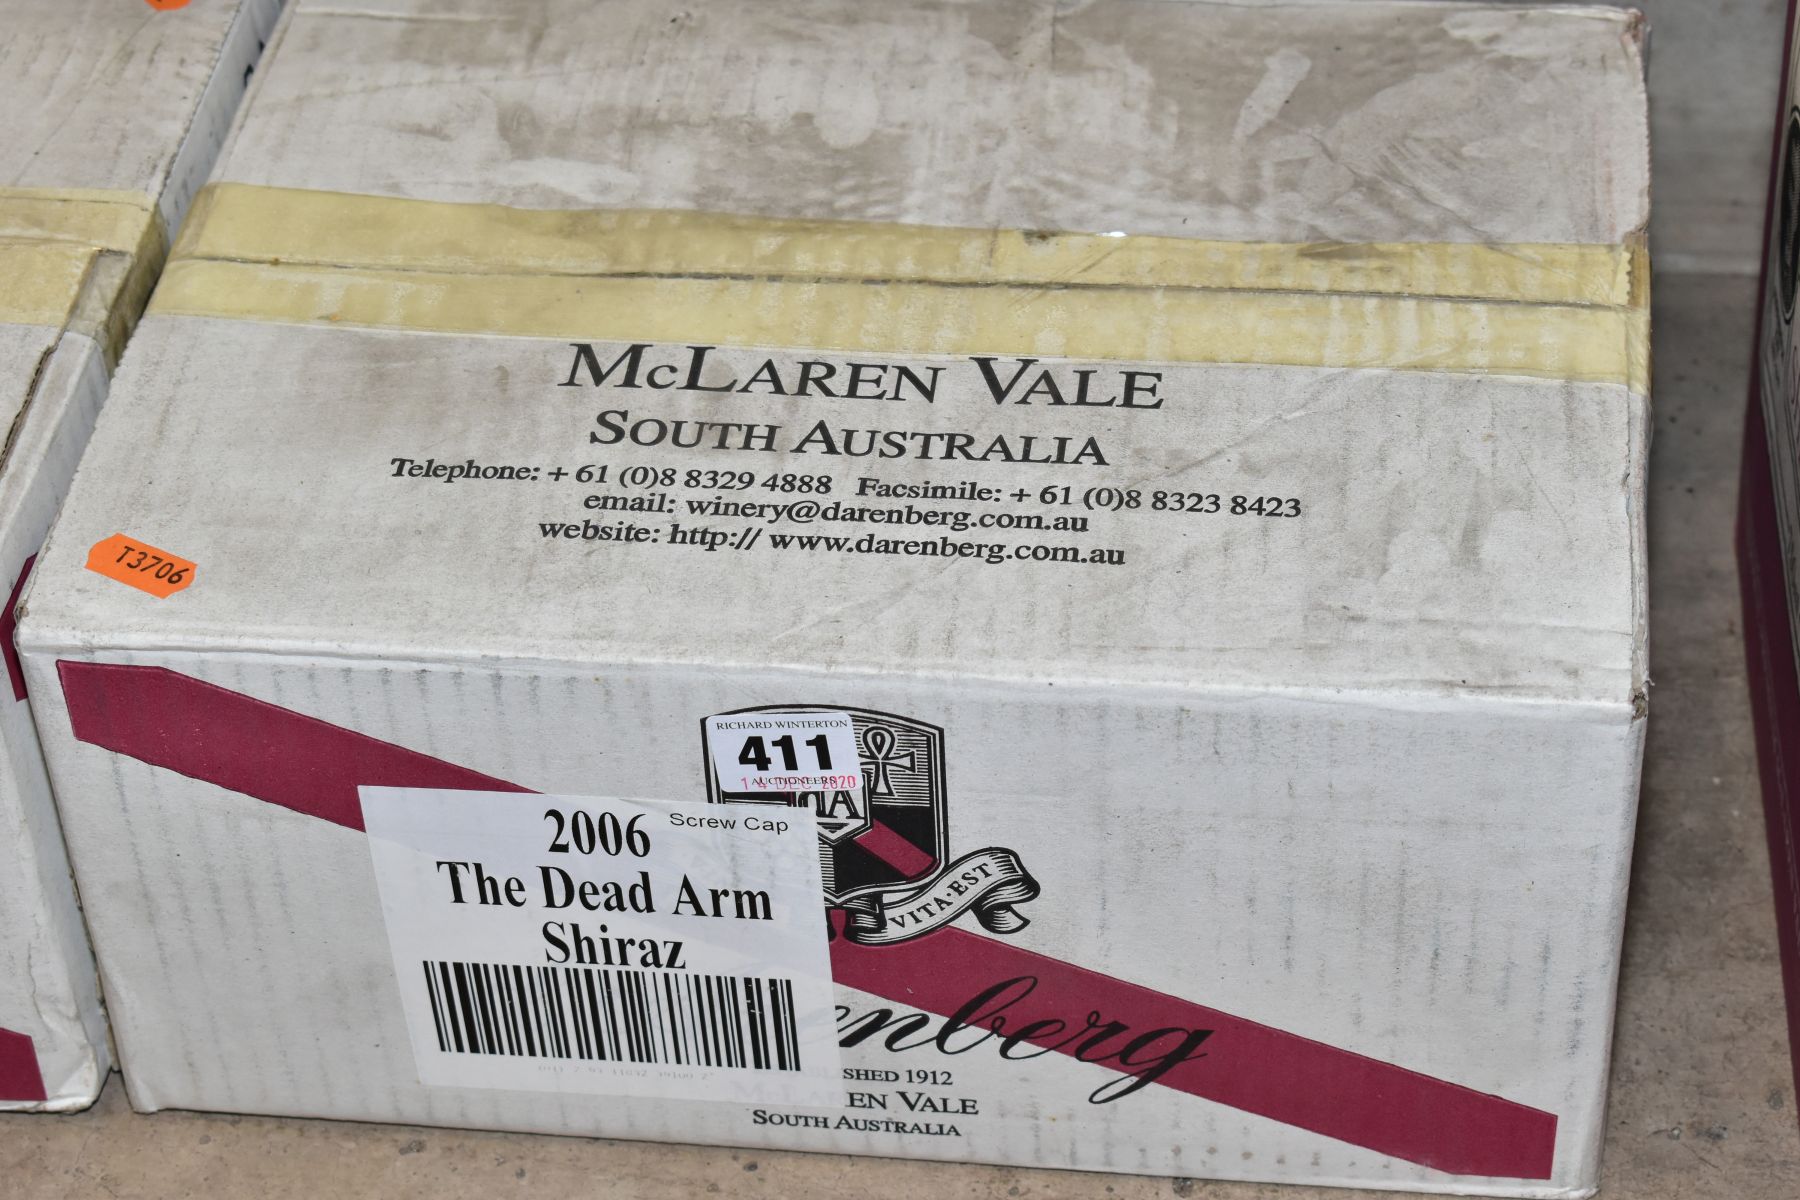 D'ARENBERG MCLAREN VALE 'DEAD ARM' SHIRAZ 2006, one box of six 750ml bottles, the wine has